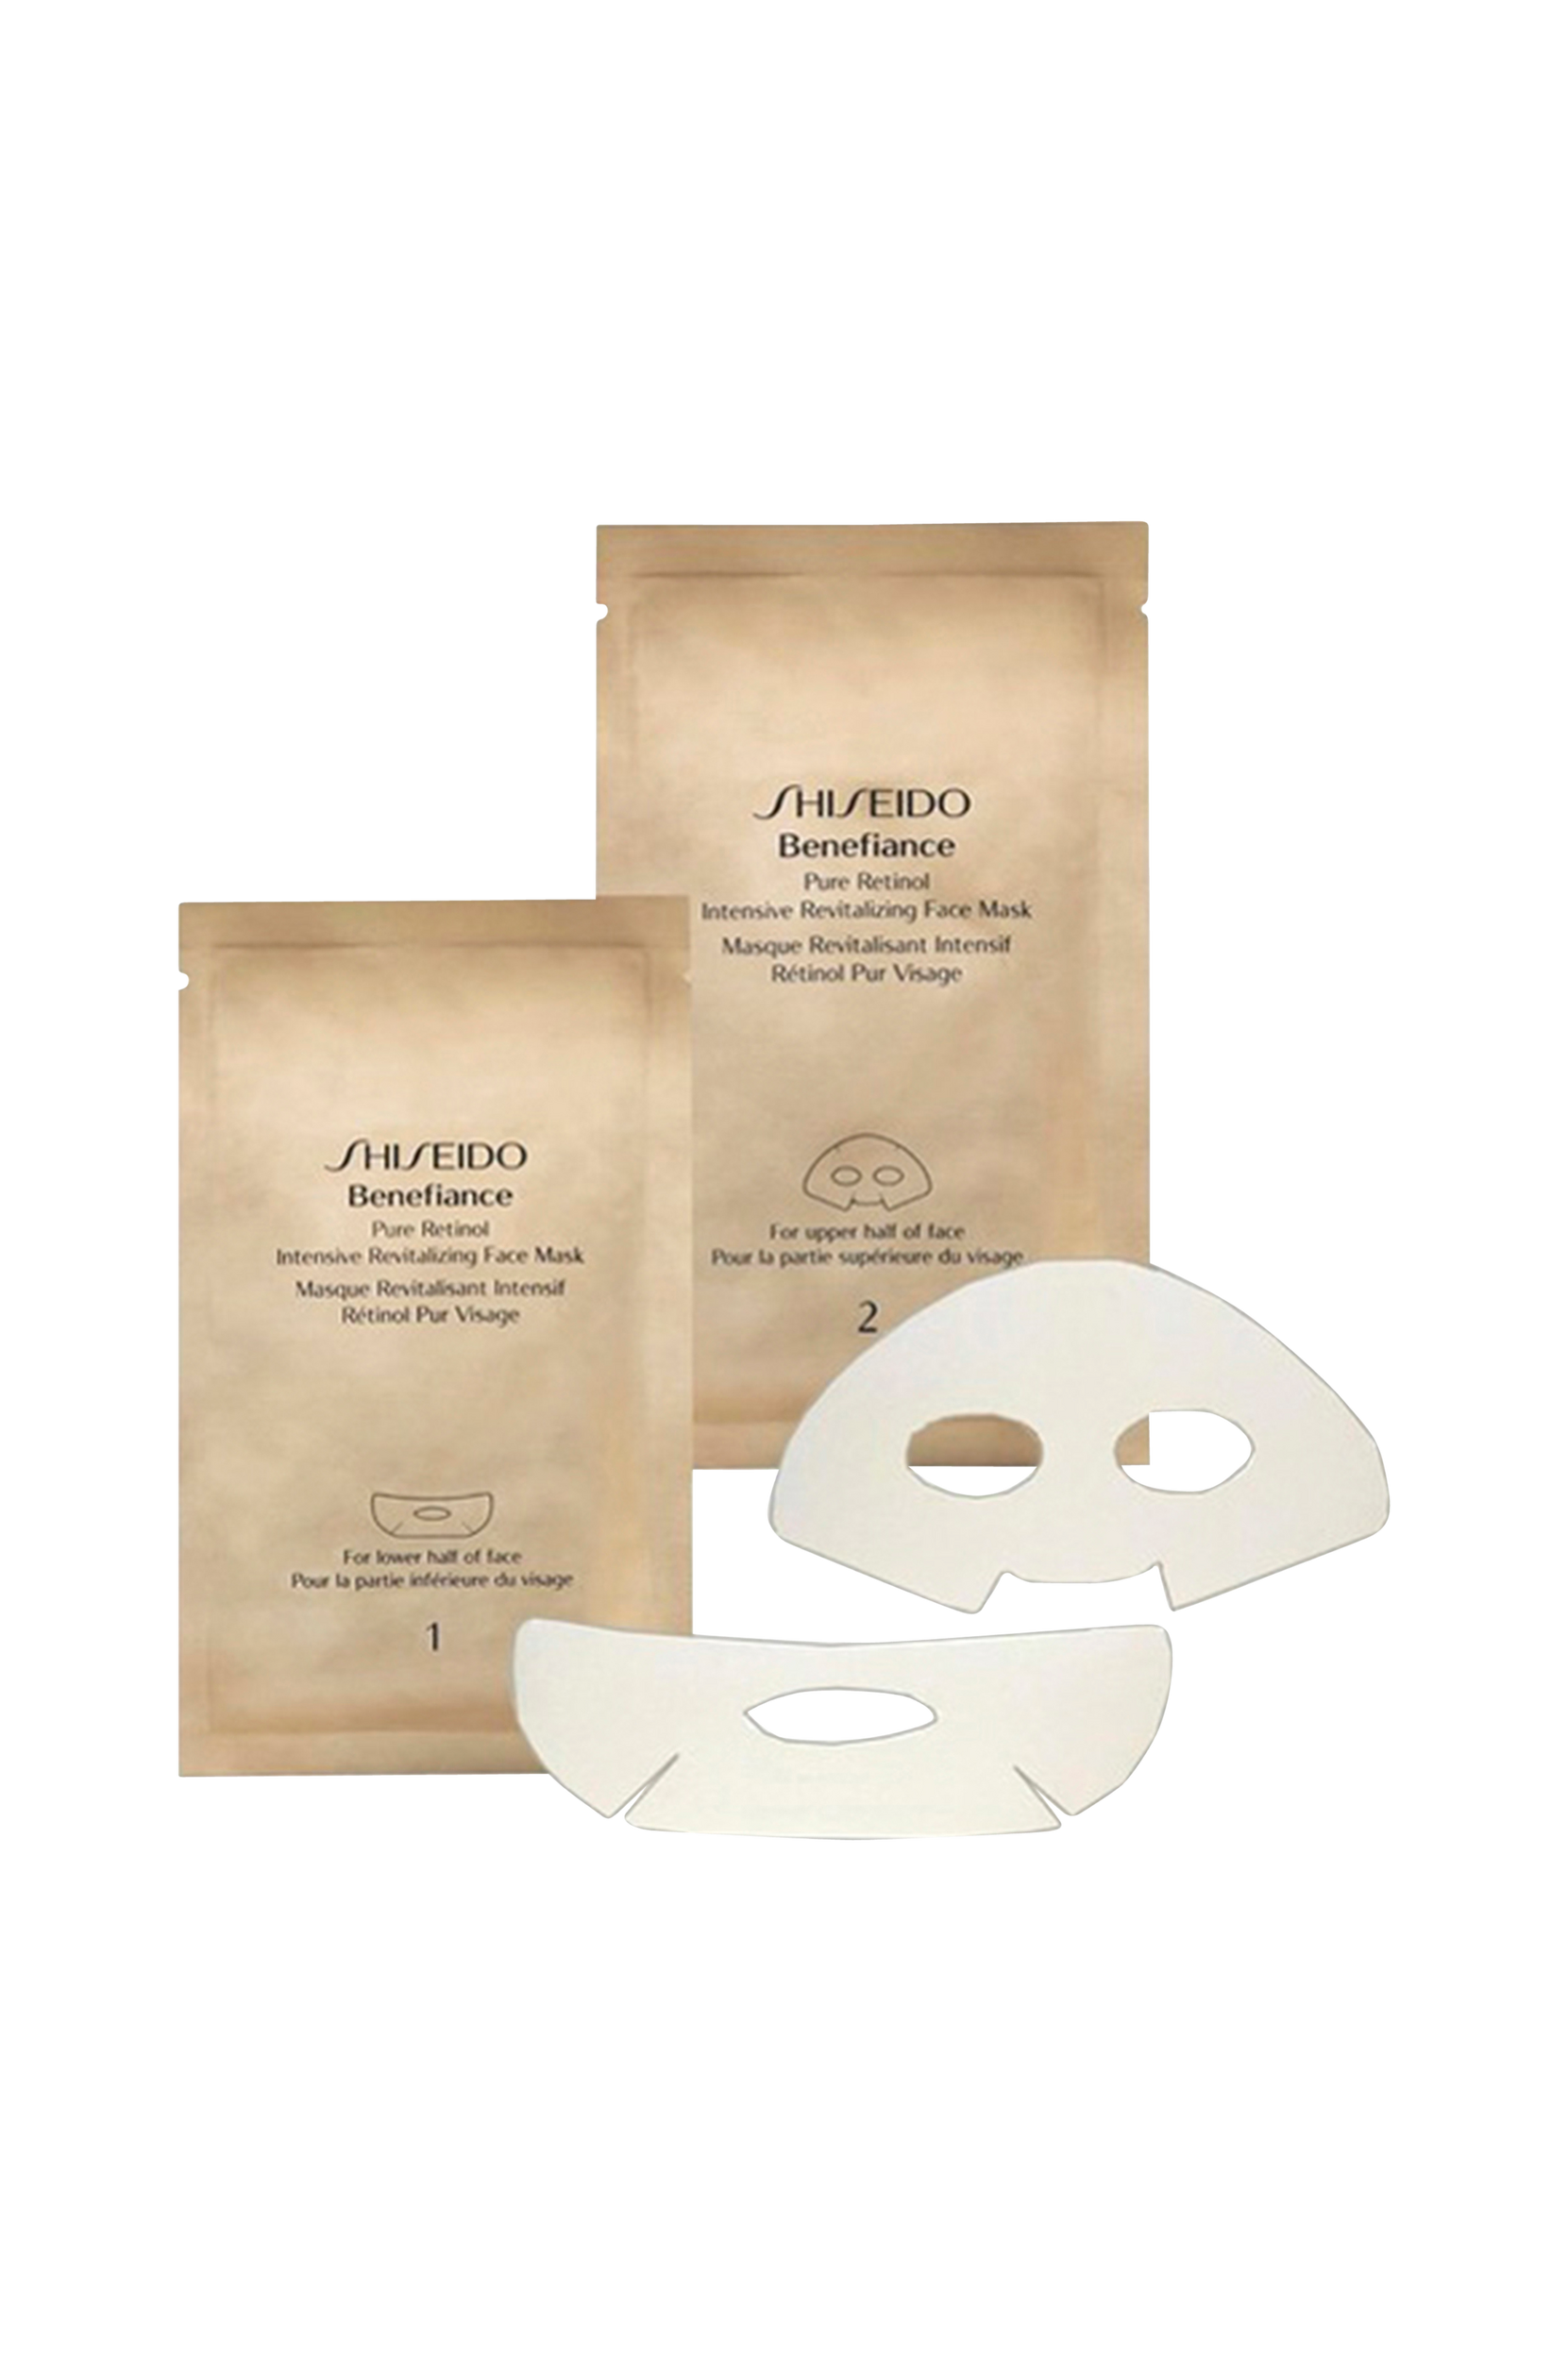 Benefiance Pure Retinol Intensive Revitalizing Face Mask, Shiseido